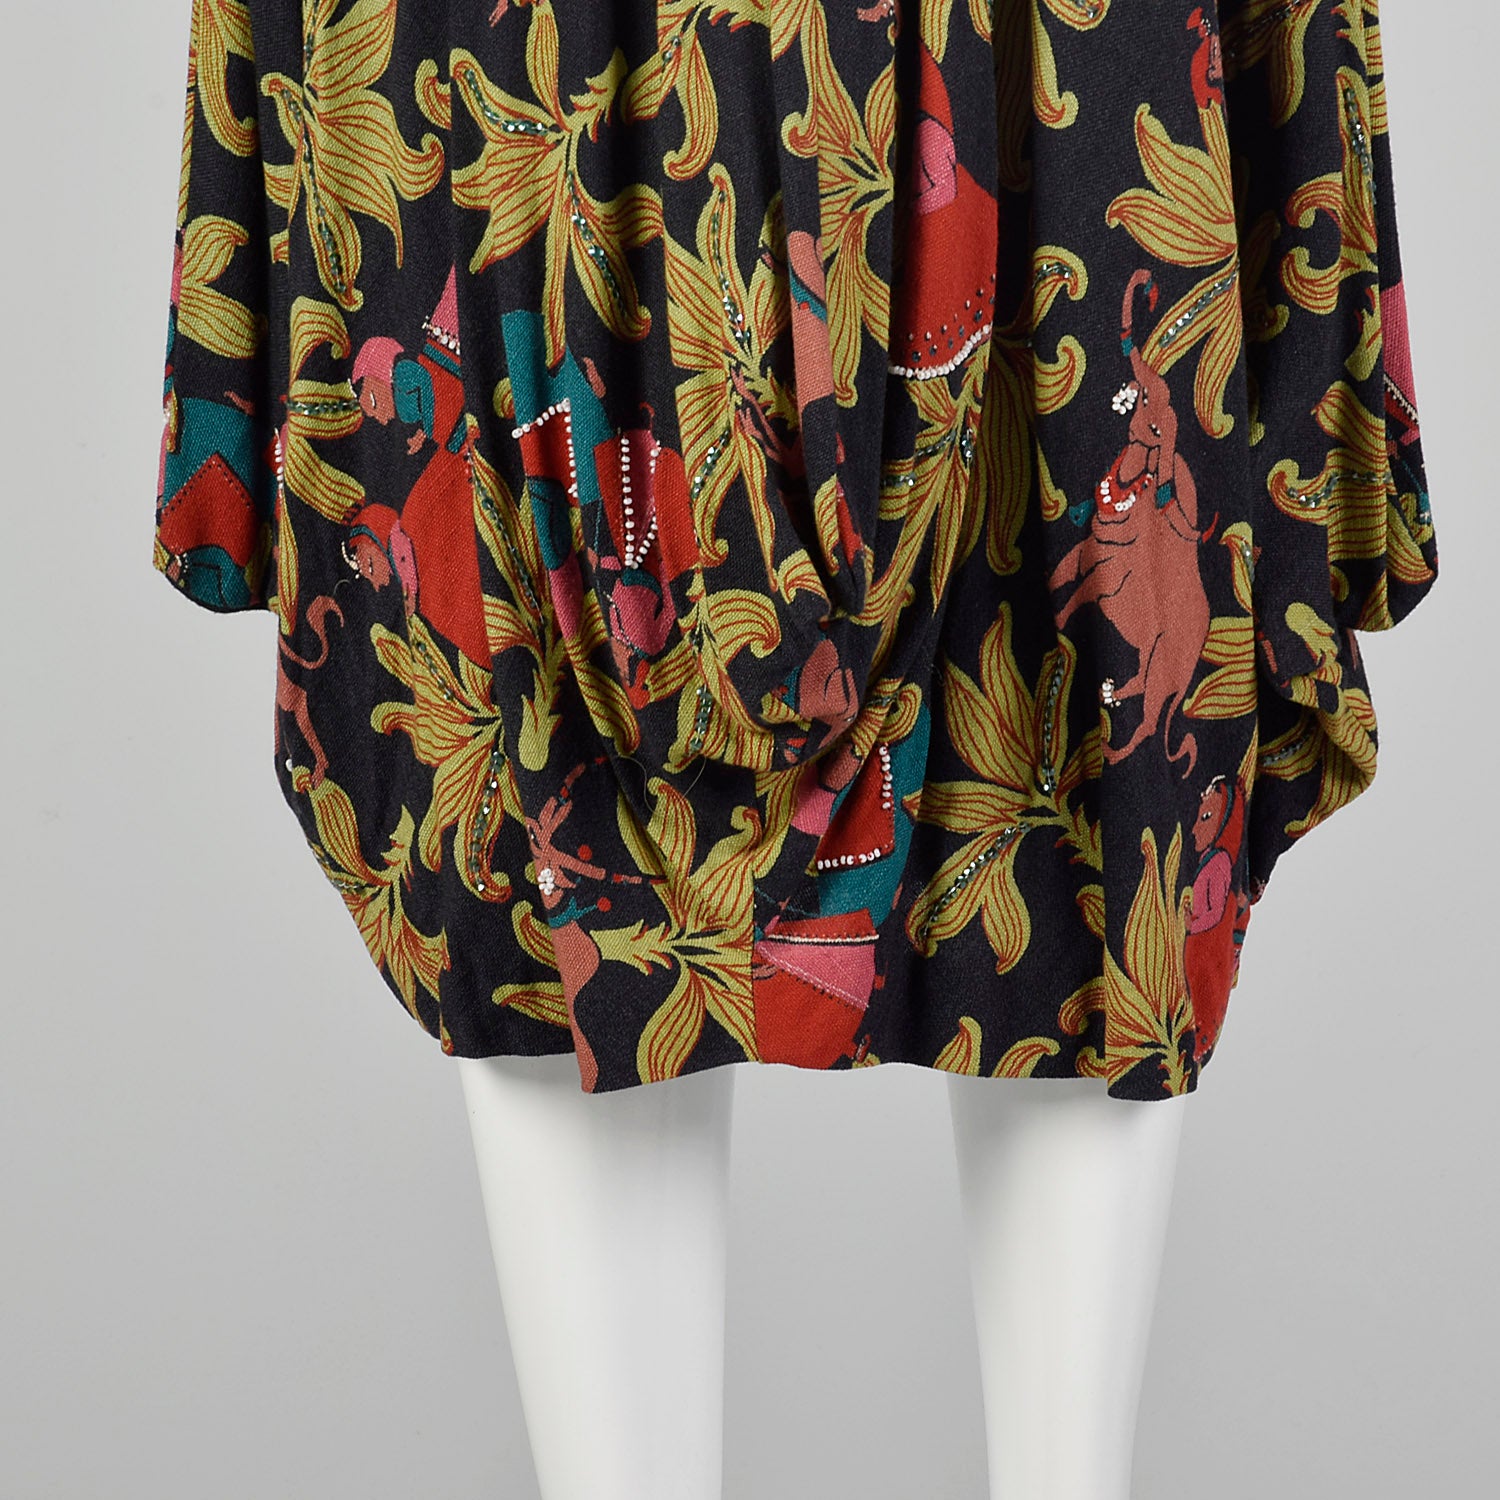 XS 1940s Novelty Print Cotton Harem Skirt